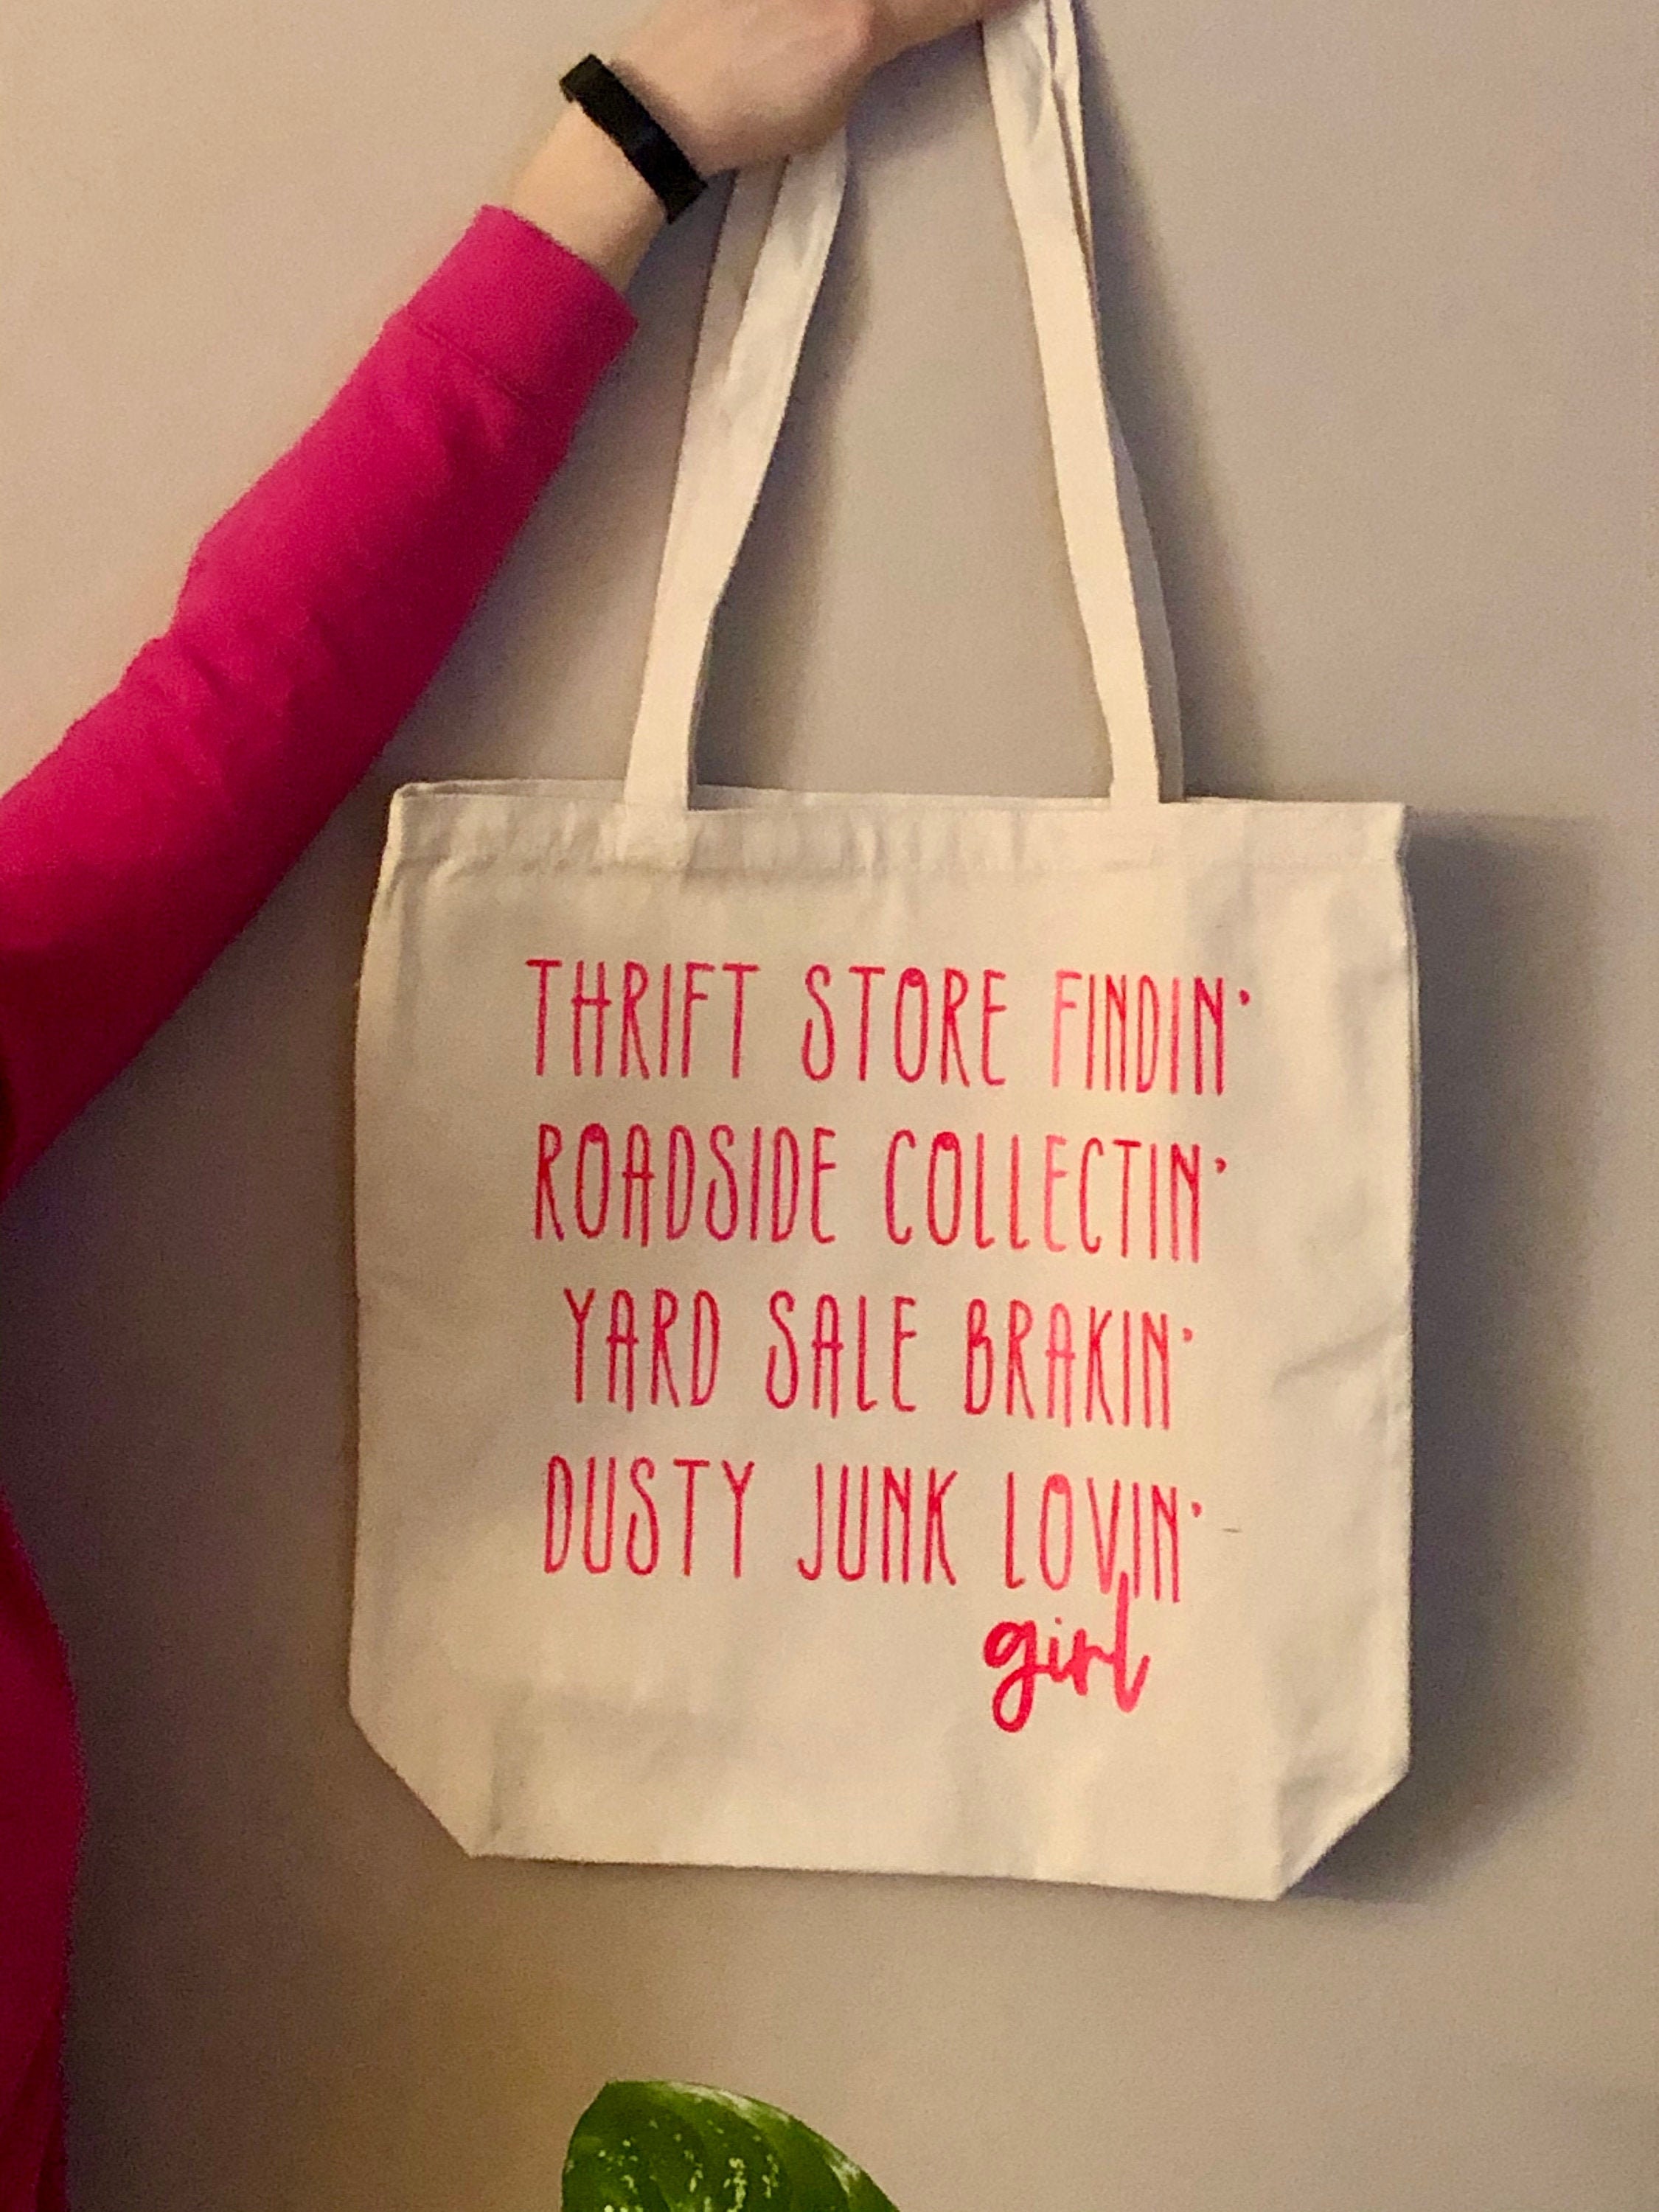 Thrift Tote Bag - Etsy